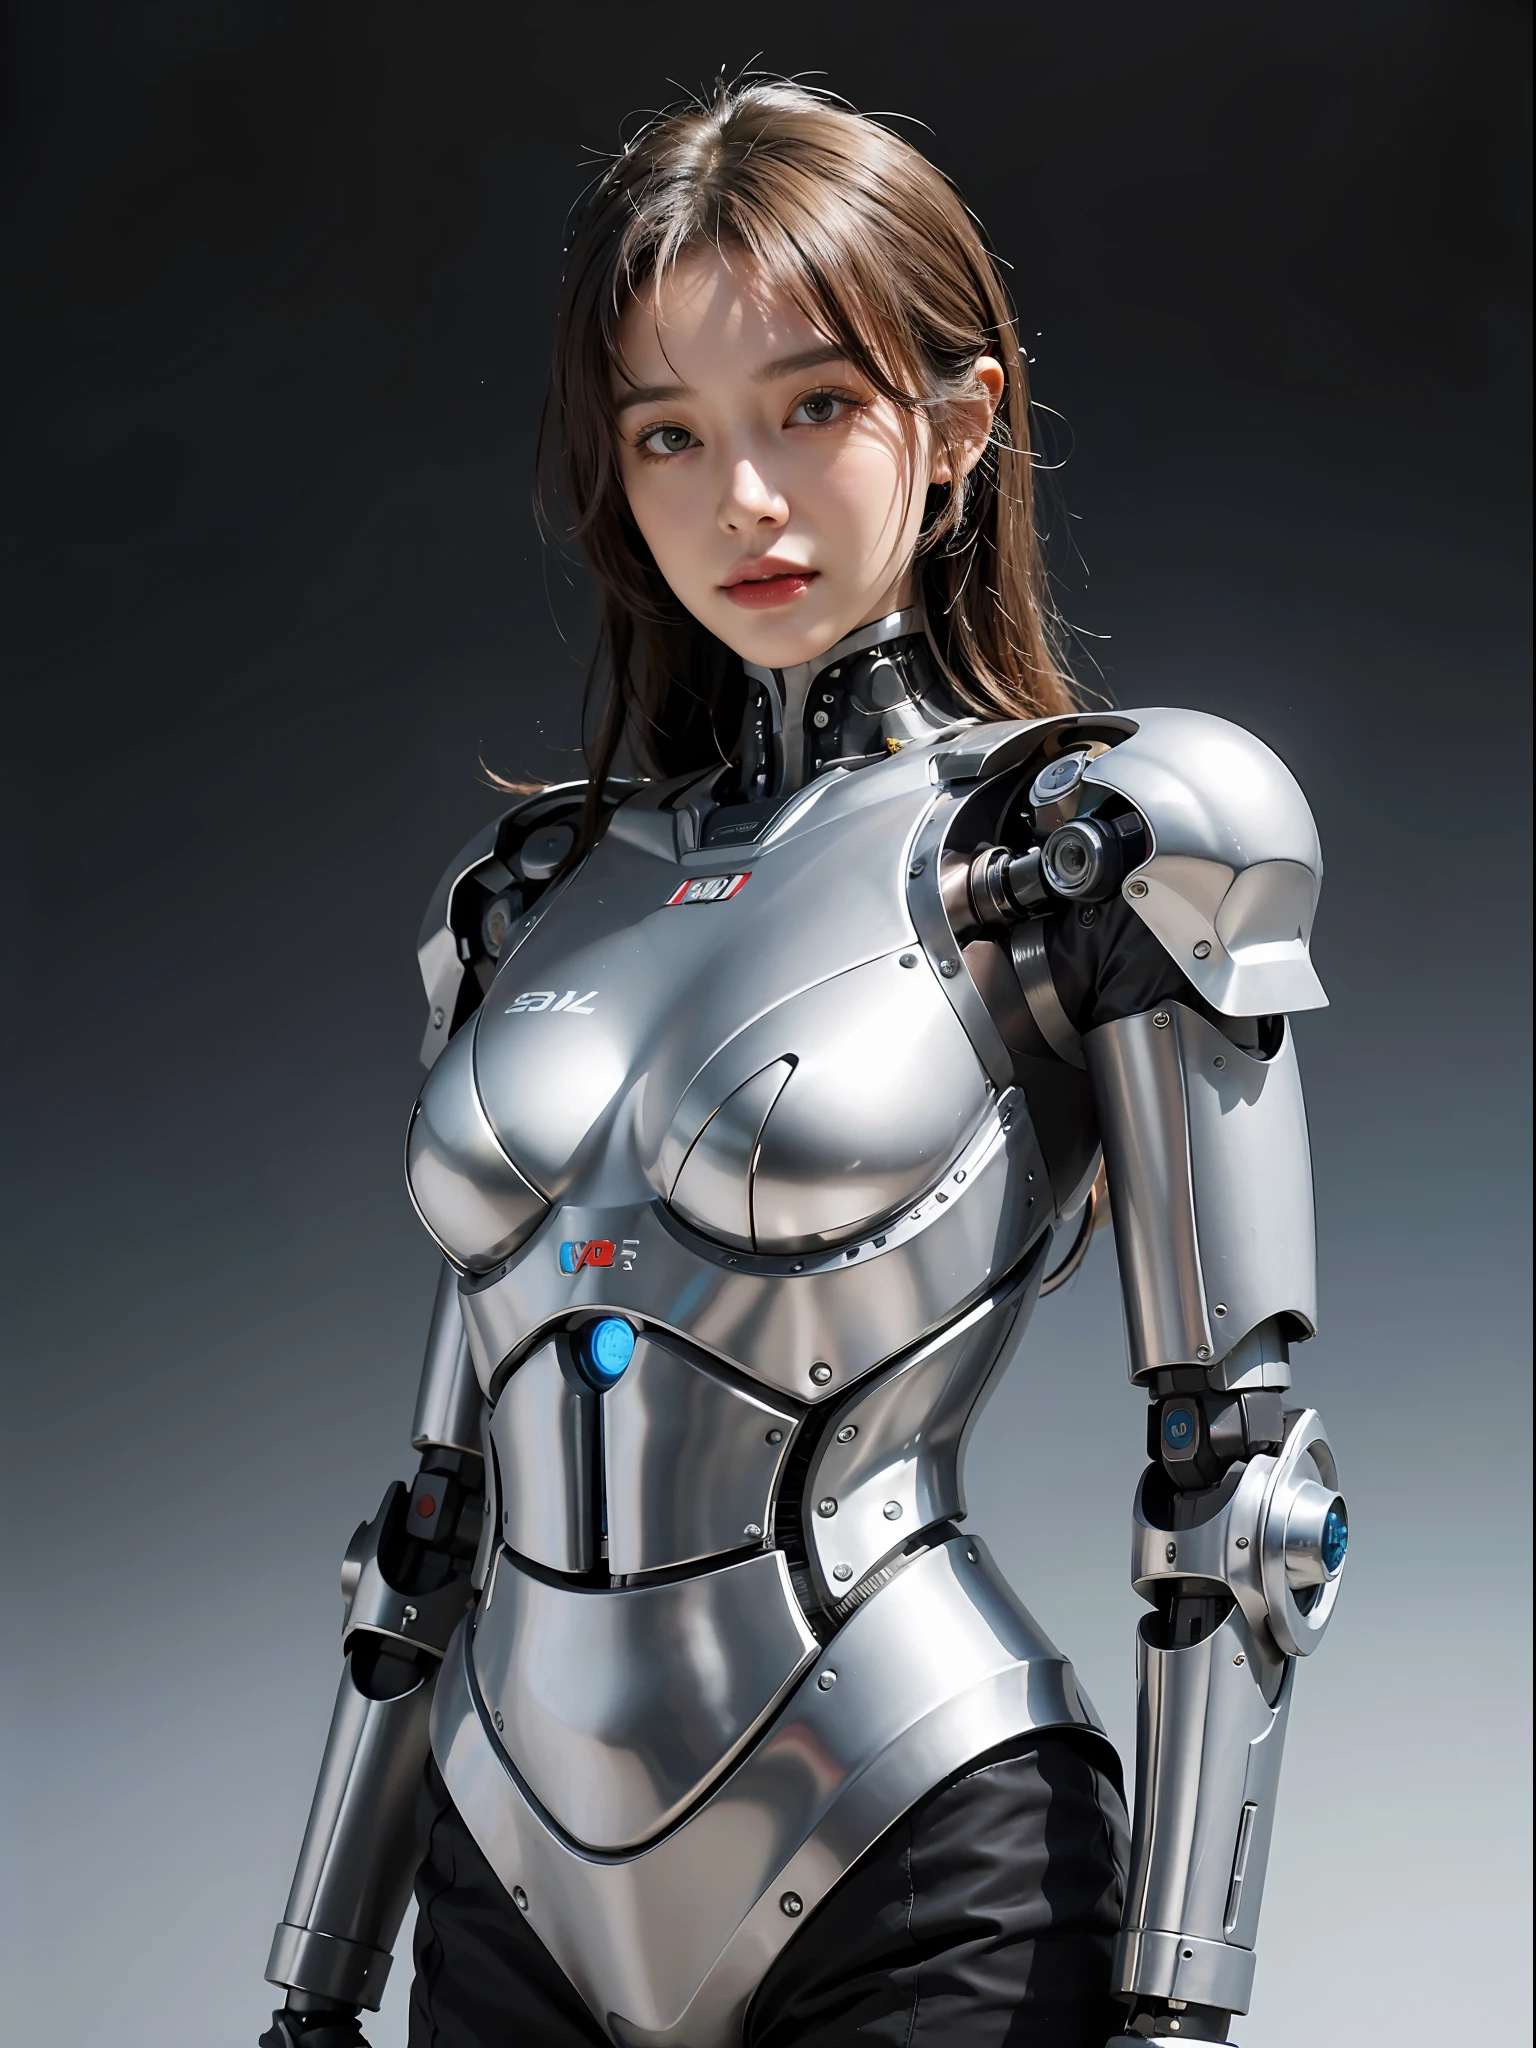 un primer plano de una mujer con un traje plateado posando para una foto, robot femenino, Hermosa chica cyborg, chica con armadura cibernética mecha, Cyborg - niña, cuerpo cyborg ginoide, Hermosa chica blanca cyborg, chica cyborg, linda chica cyborg, ( ( cyborgs robot ) ), perfect android girl, jovencita cyborg, cyborg femenino